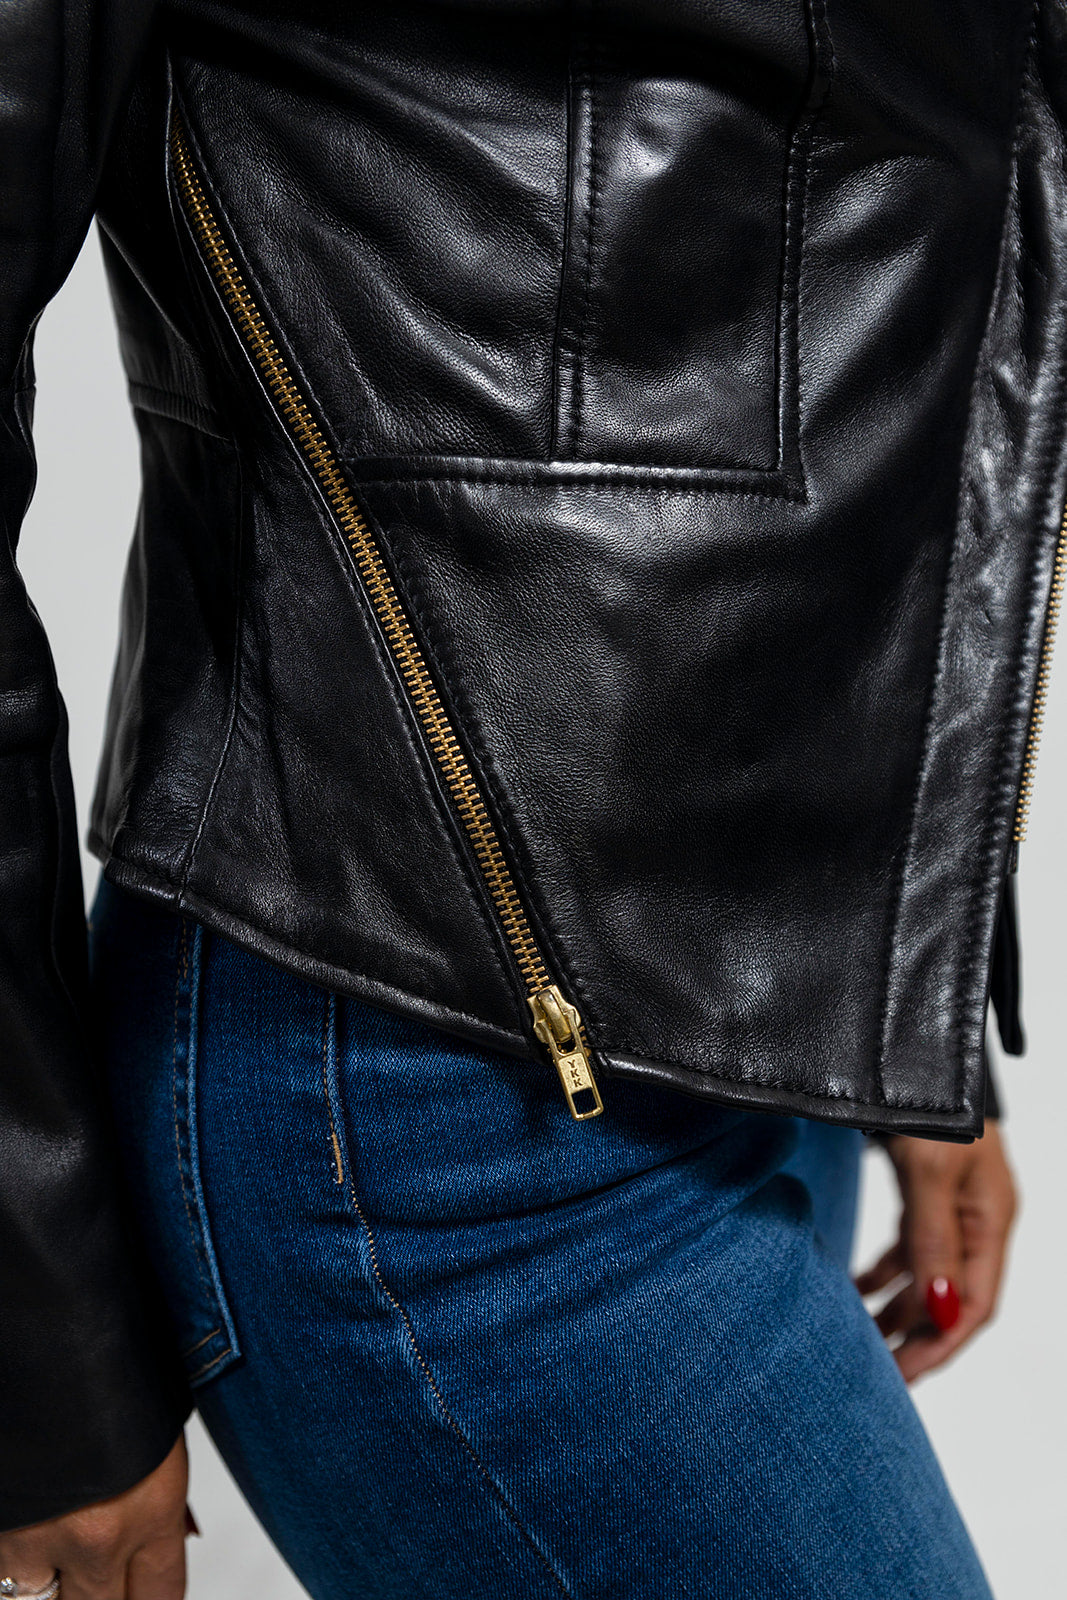 Zoey Womens Fashion Leather Jacket